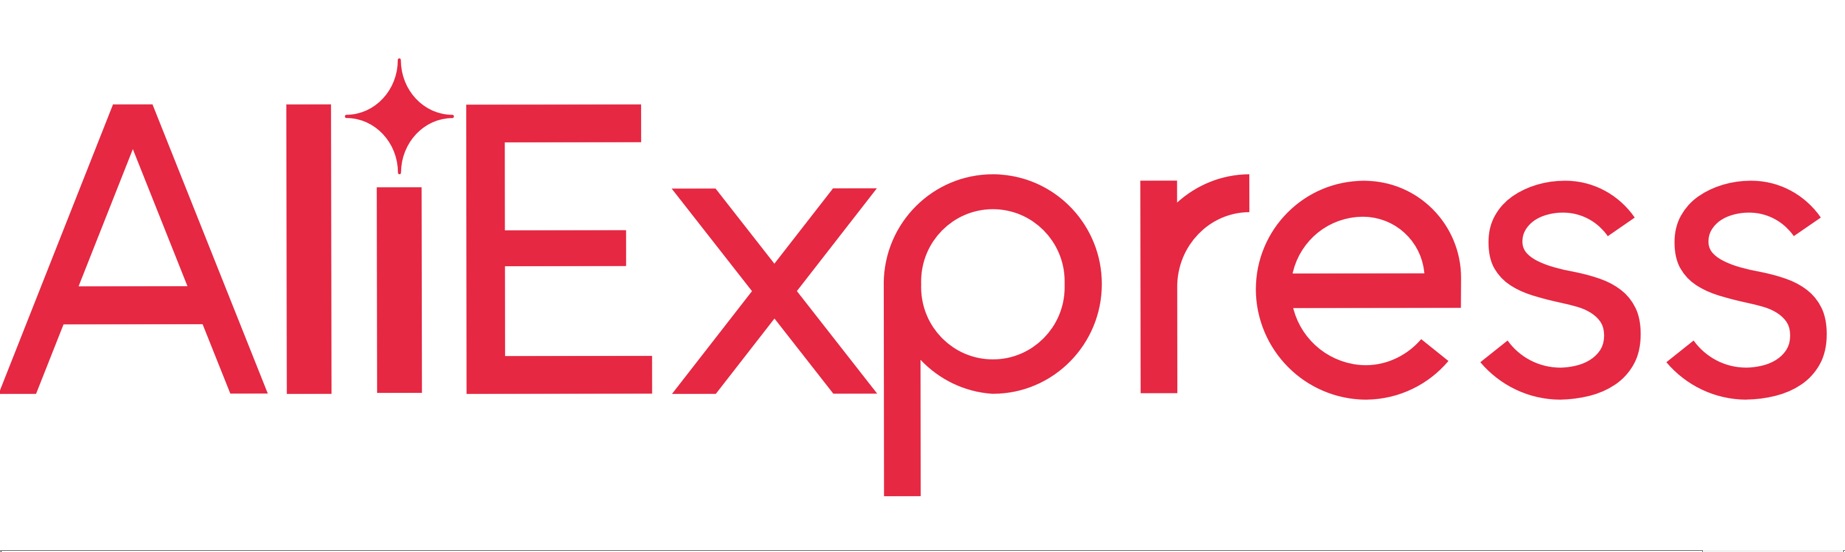 Aliexpress_logo